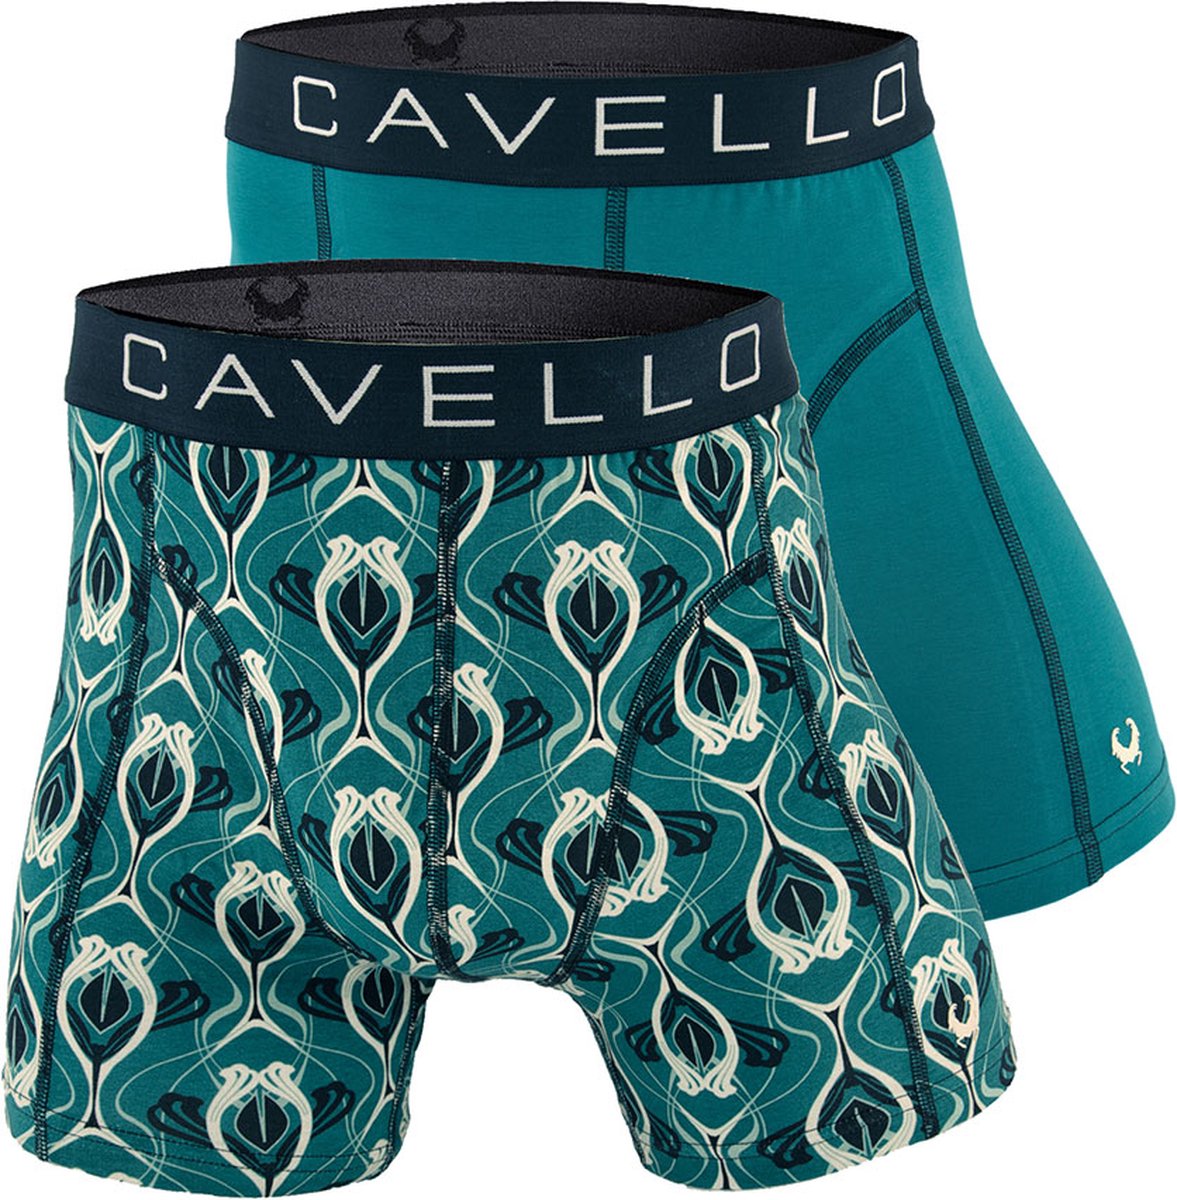 Cavello Boxershorts 2-pack Petrol